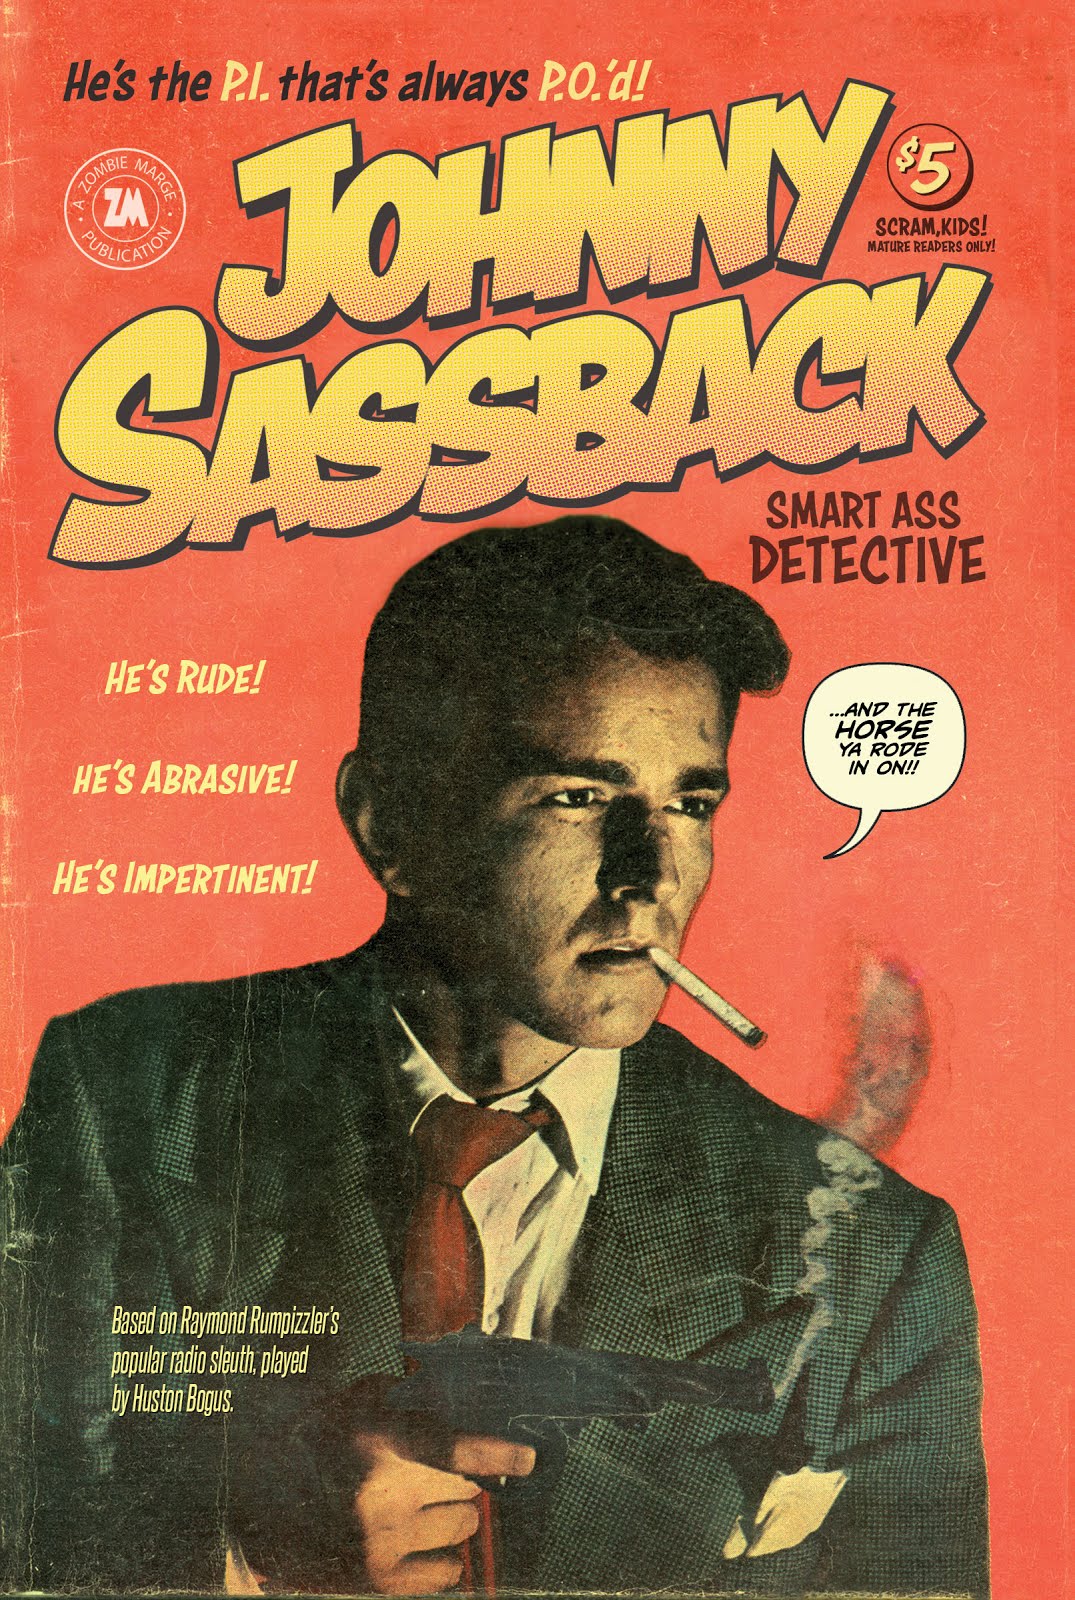 Johnny Sassback